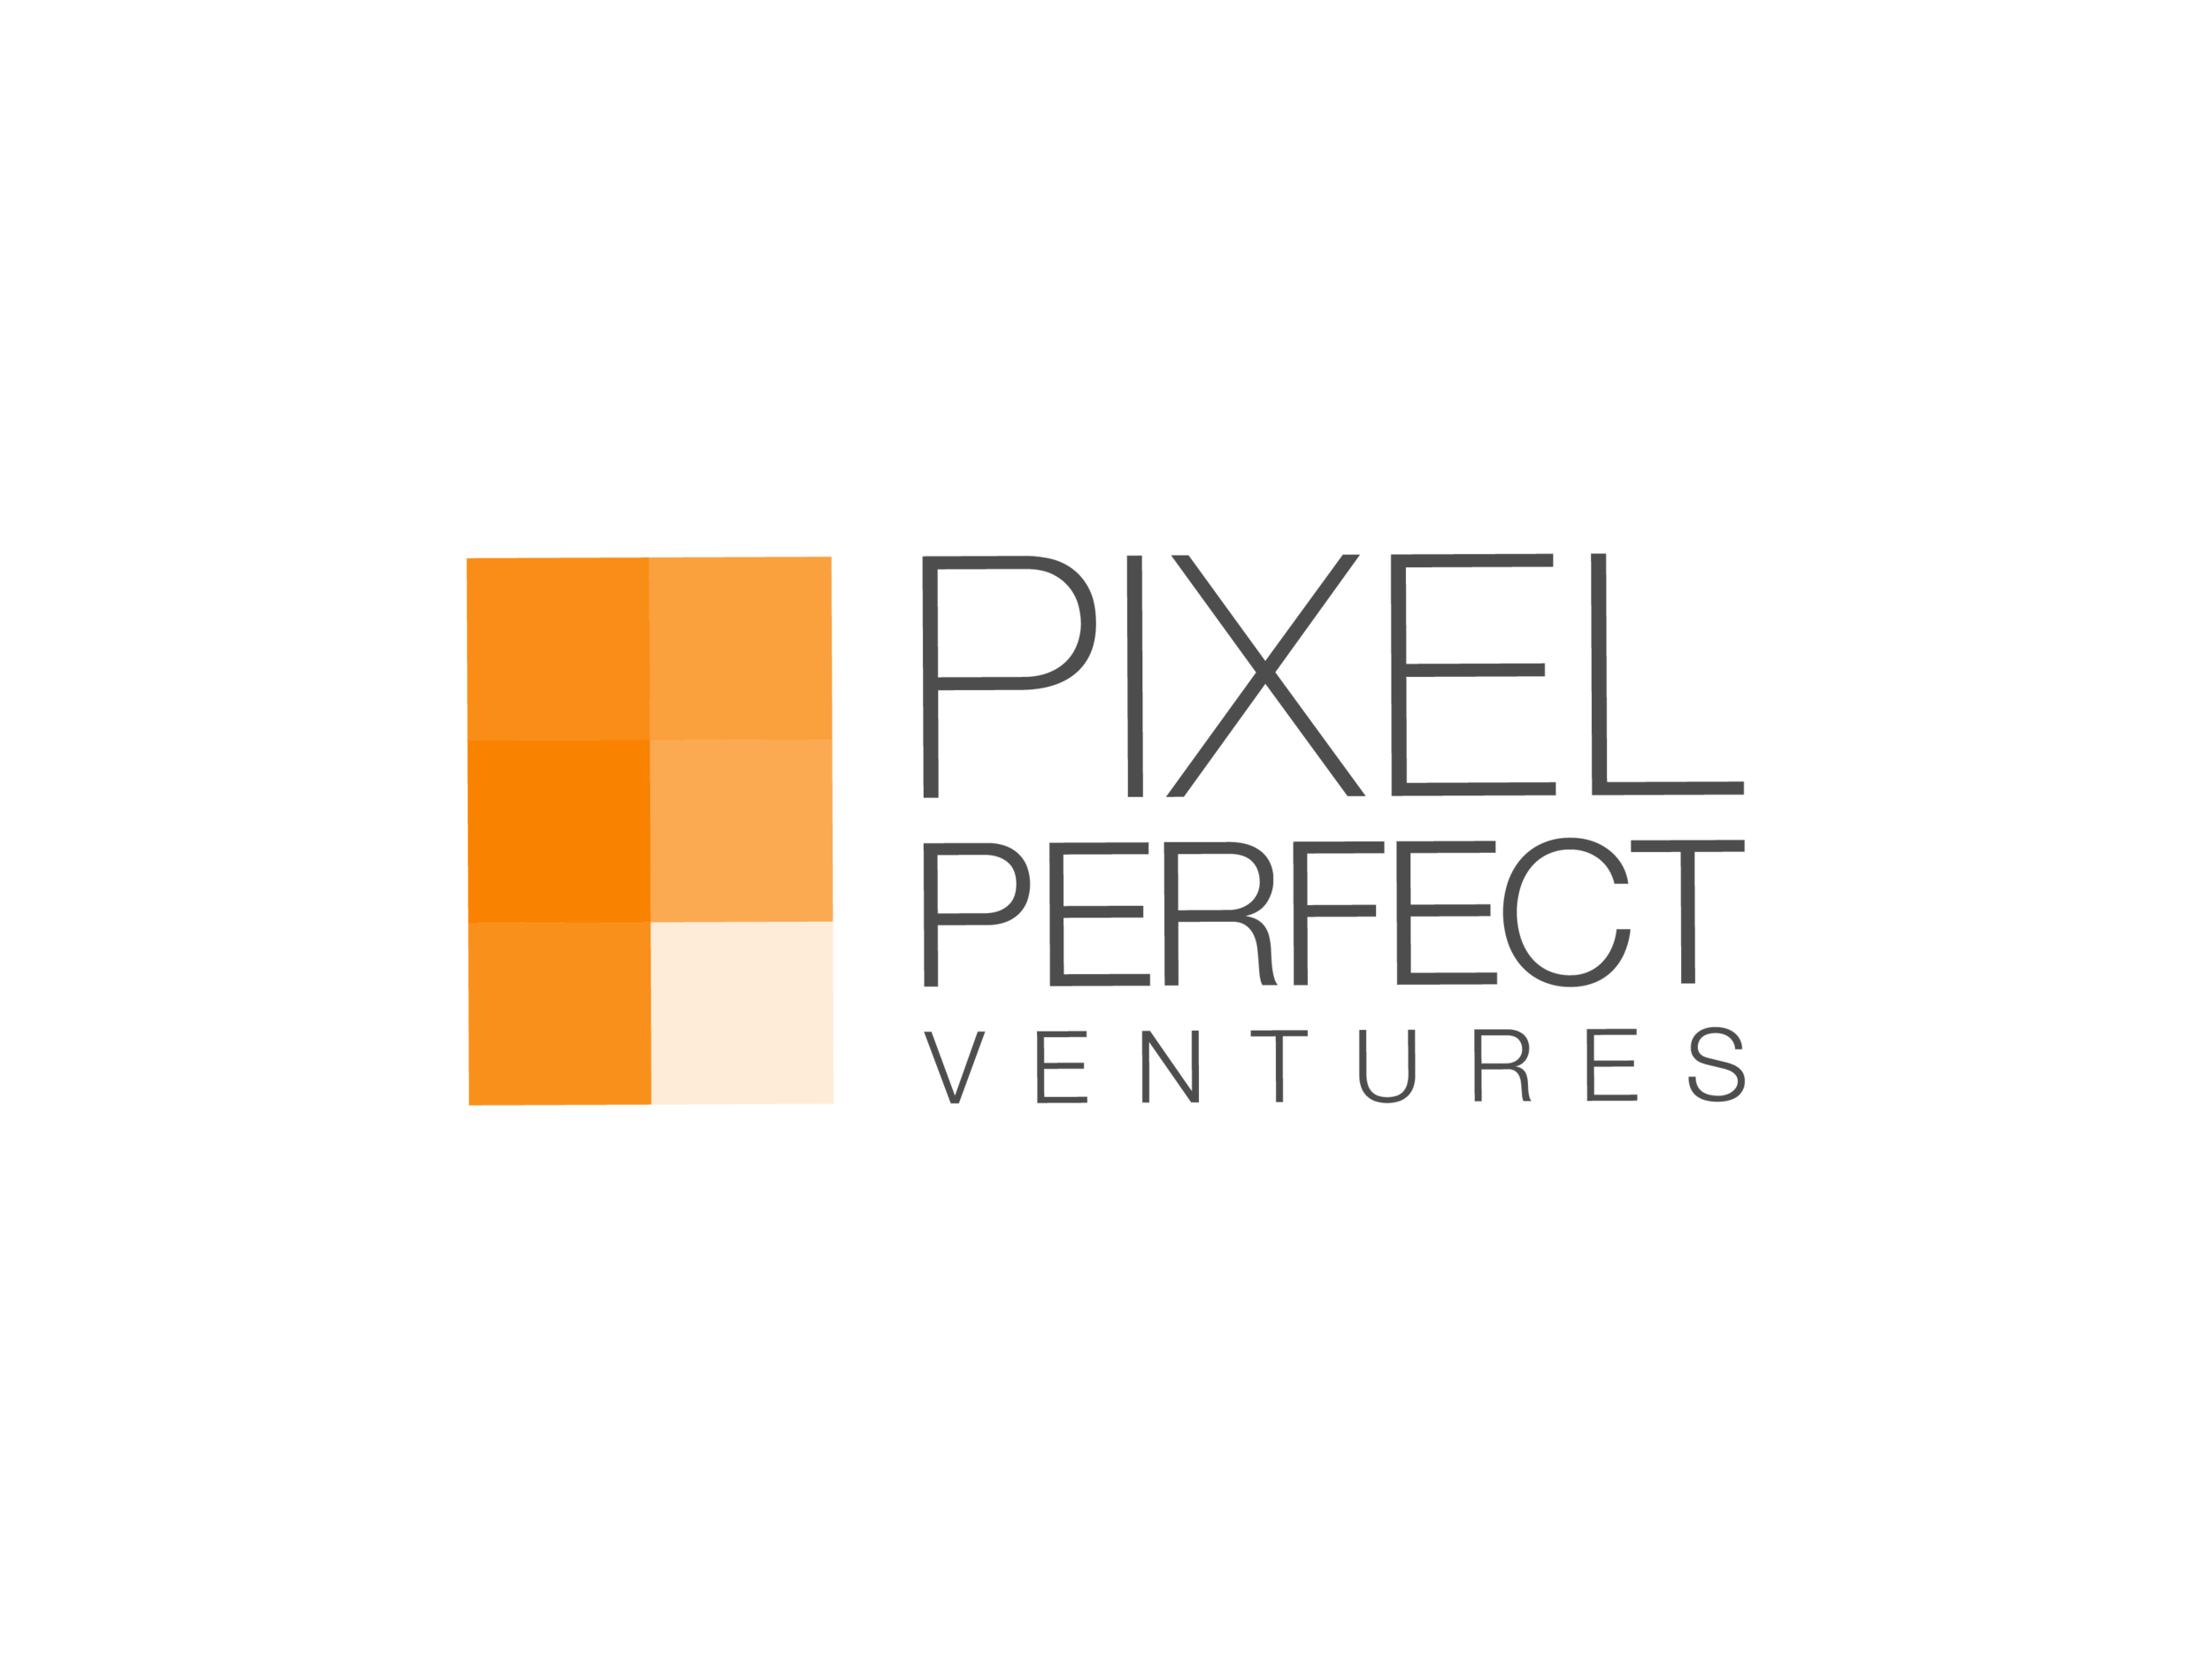 PIxel Perfect Ventures-750px-01.png